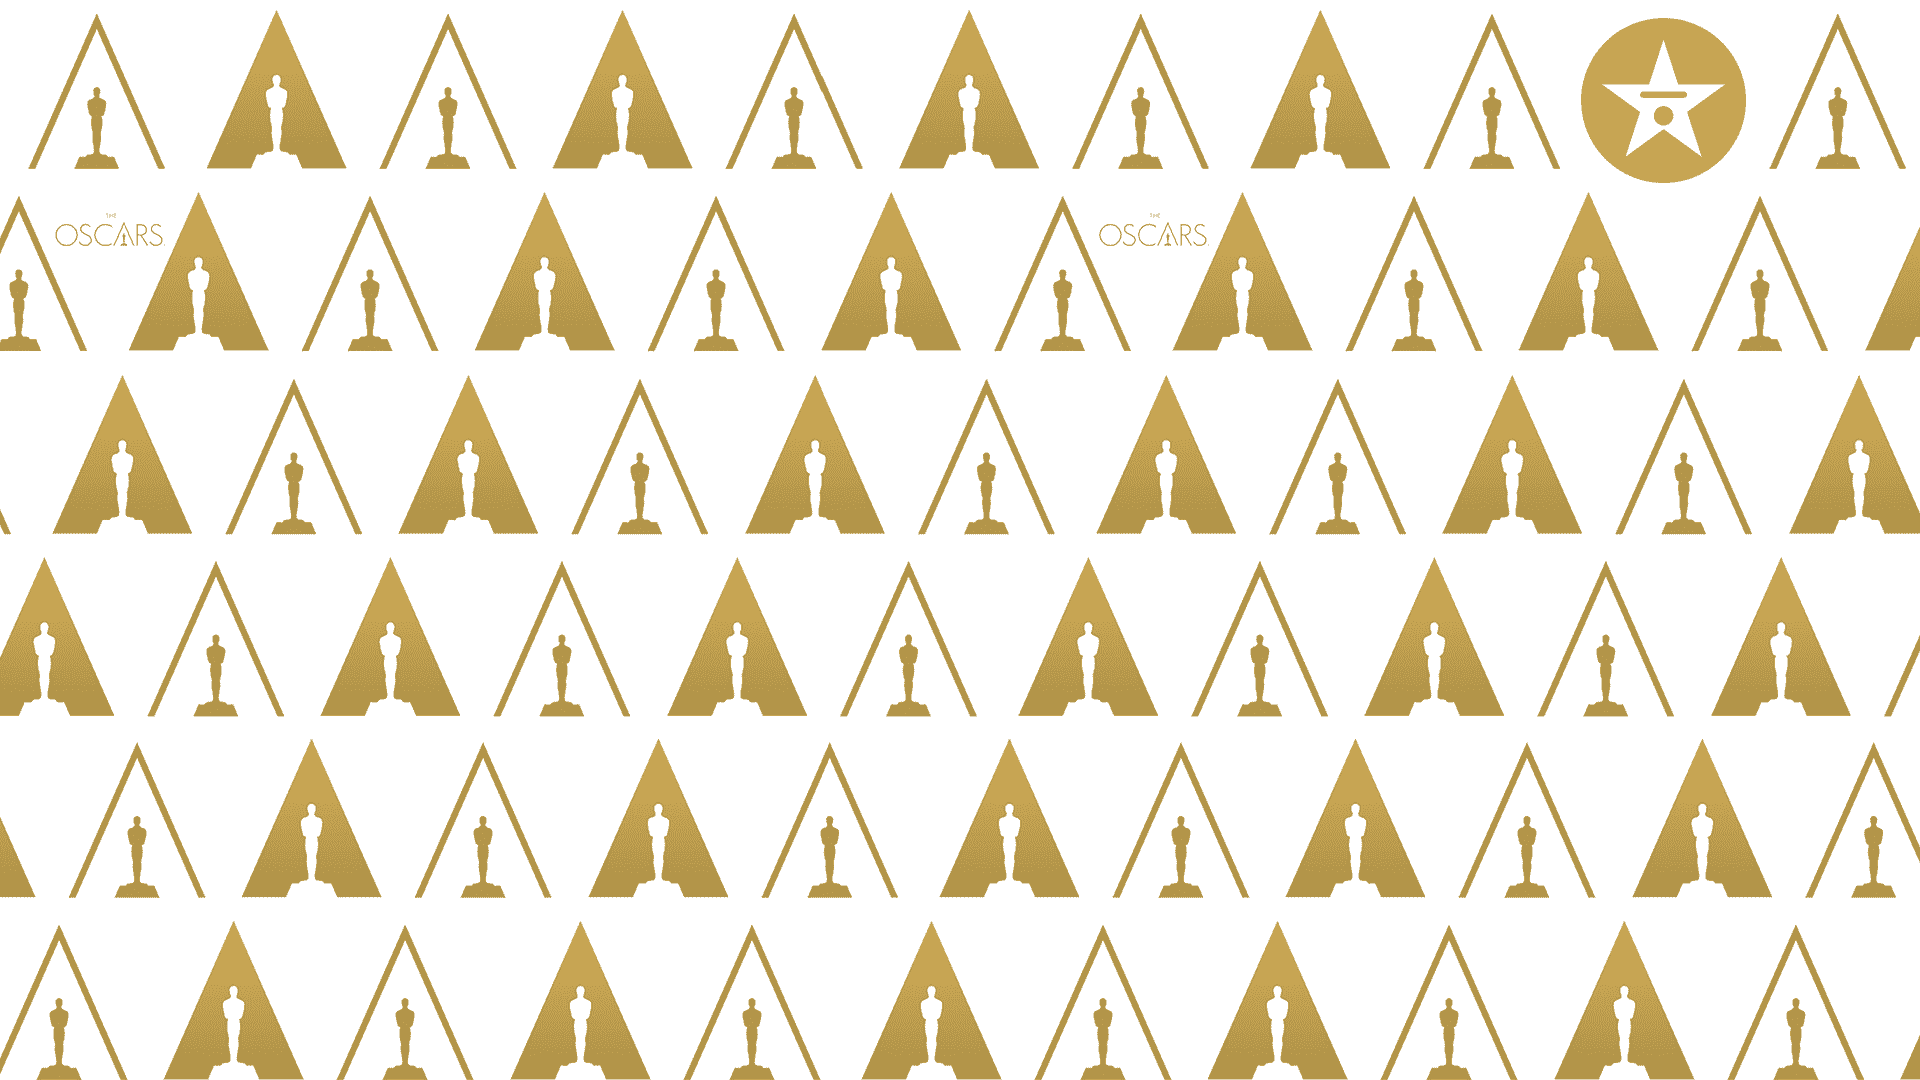 Oscars Zoom Background